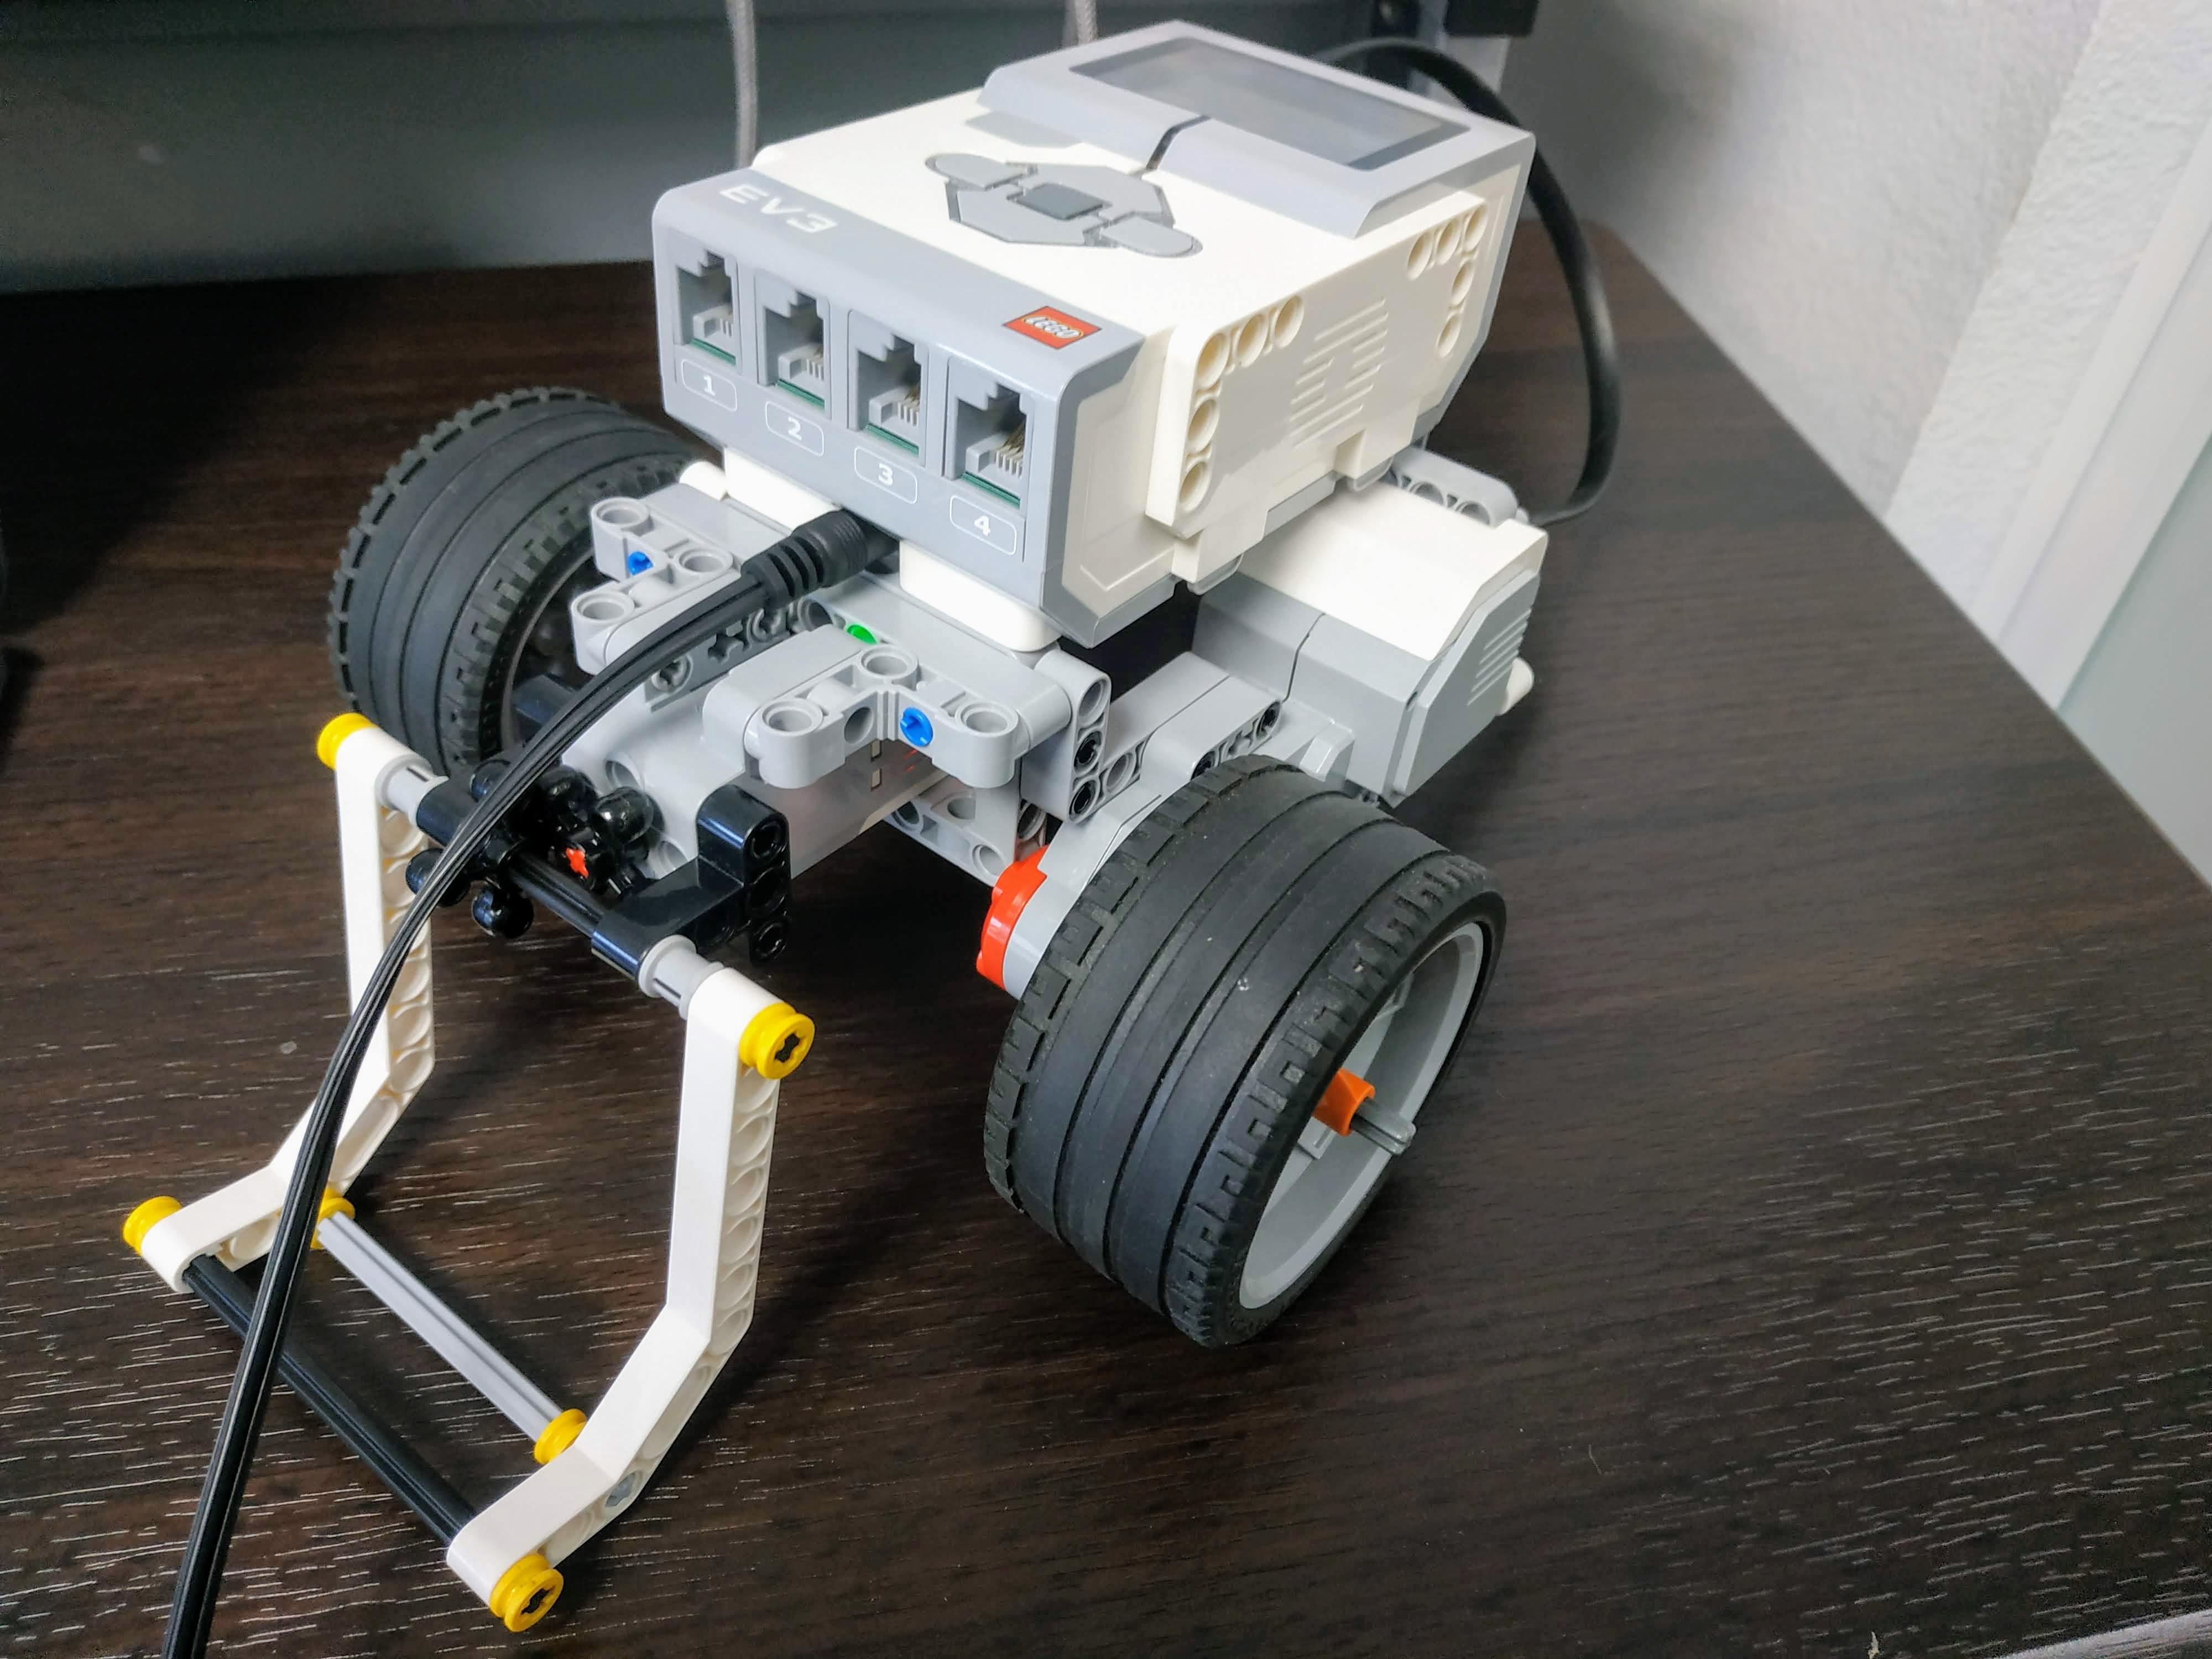 pant så Sway File:Lego Mindstorms EV3 Robot.jpg - Wikimedia Commons